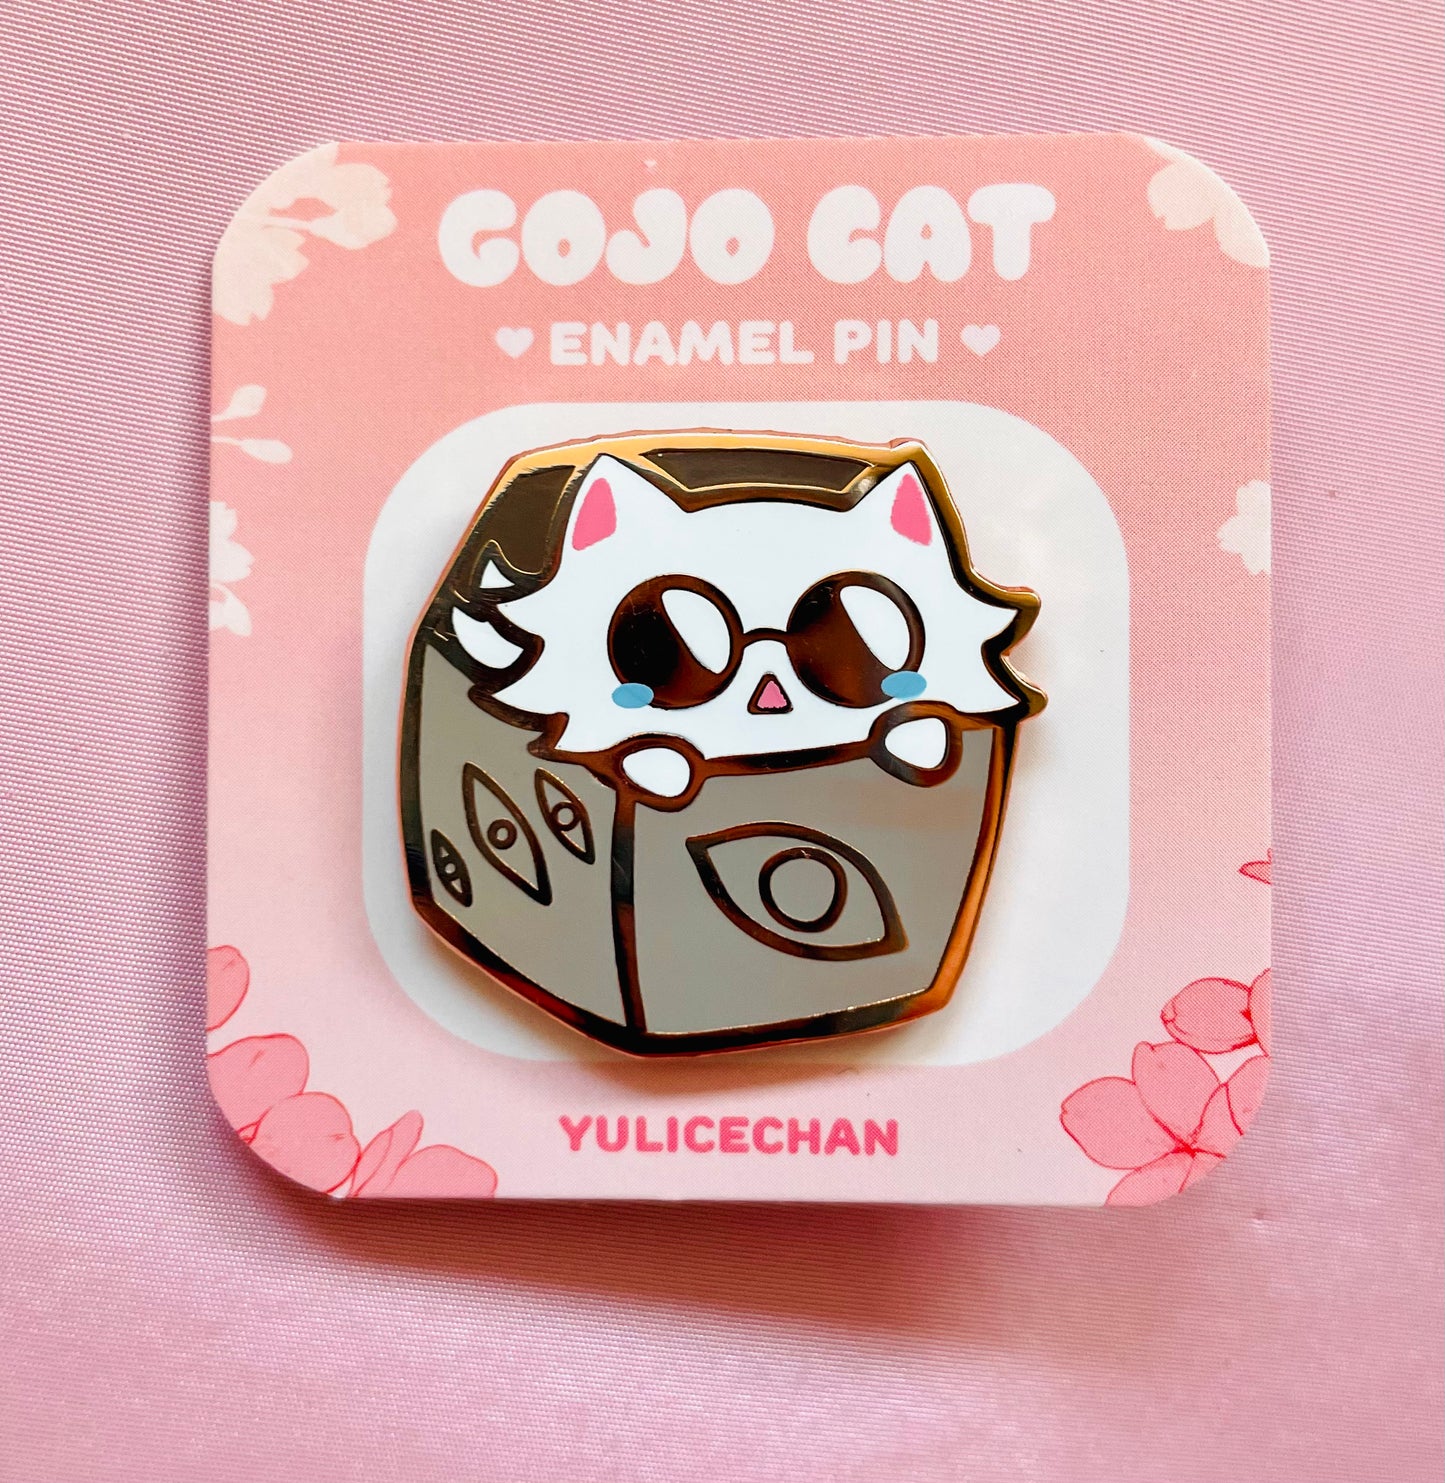 Gojo Cat Prison Cube Enamel Pin